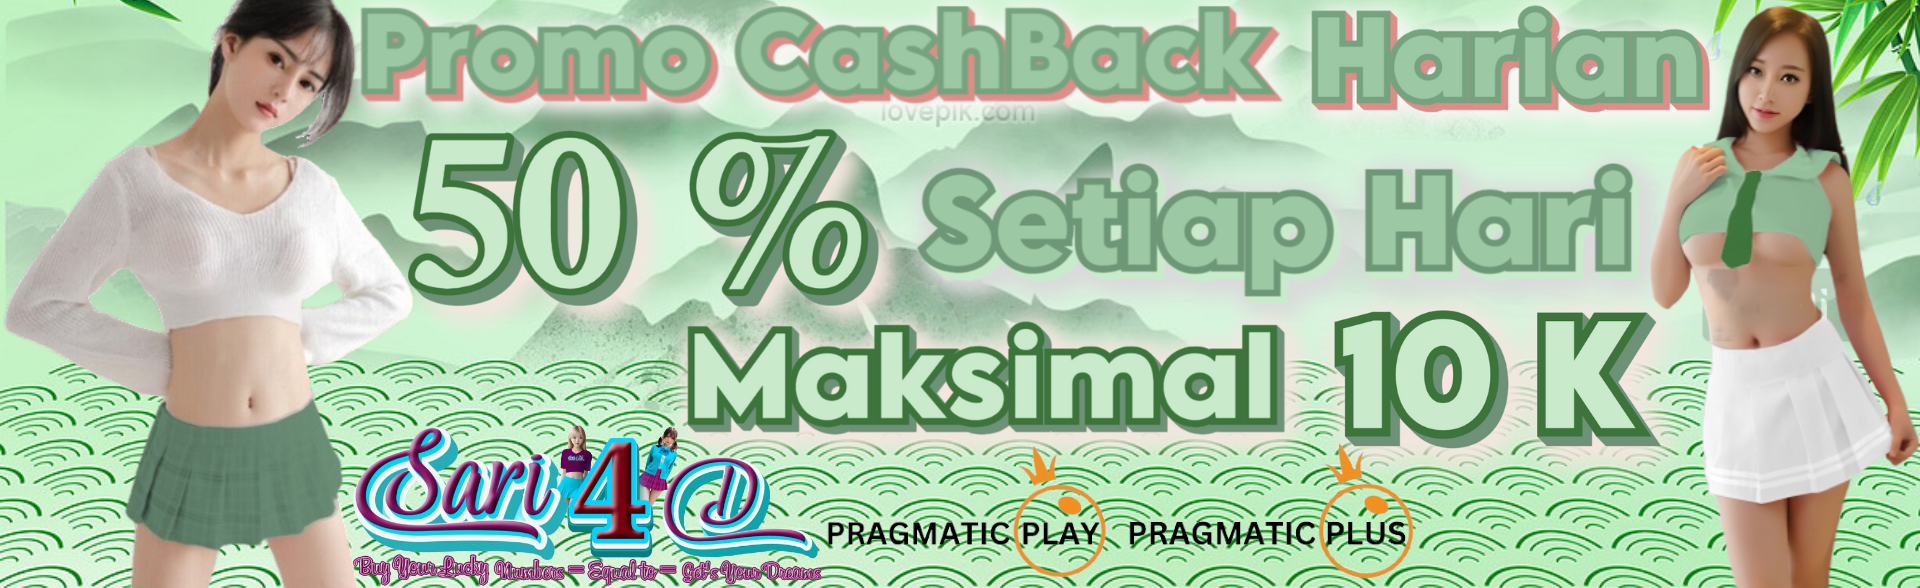 CashBack 50%